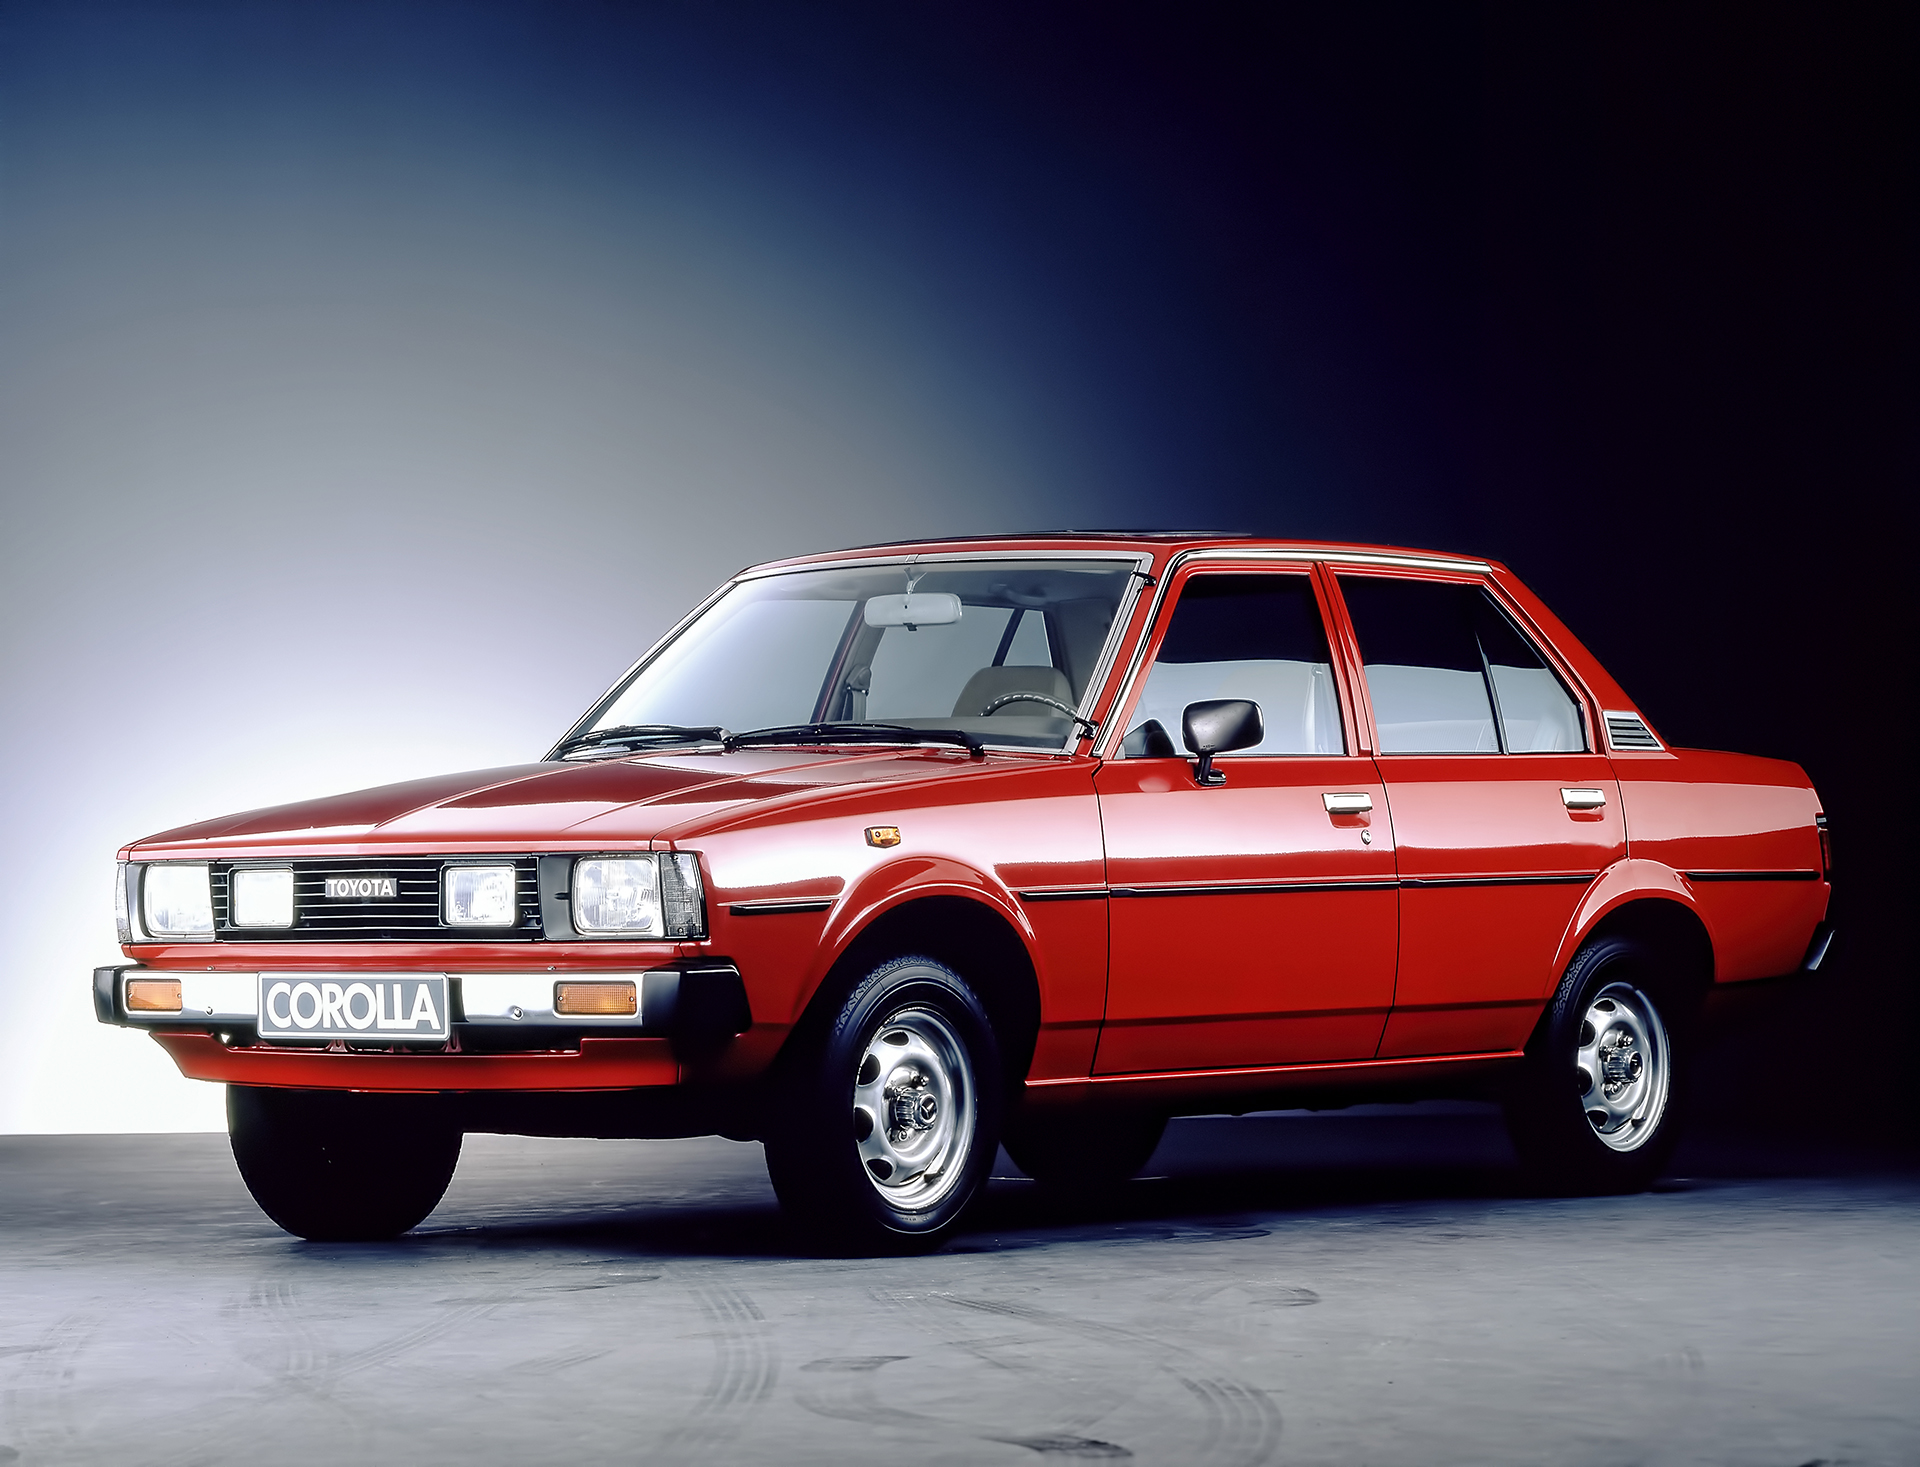 Europe - The 4th Generation Corolla (1979 - 1983)